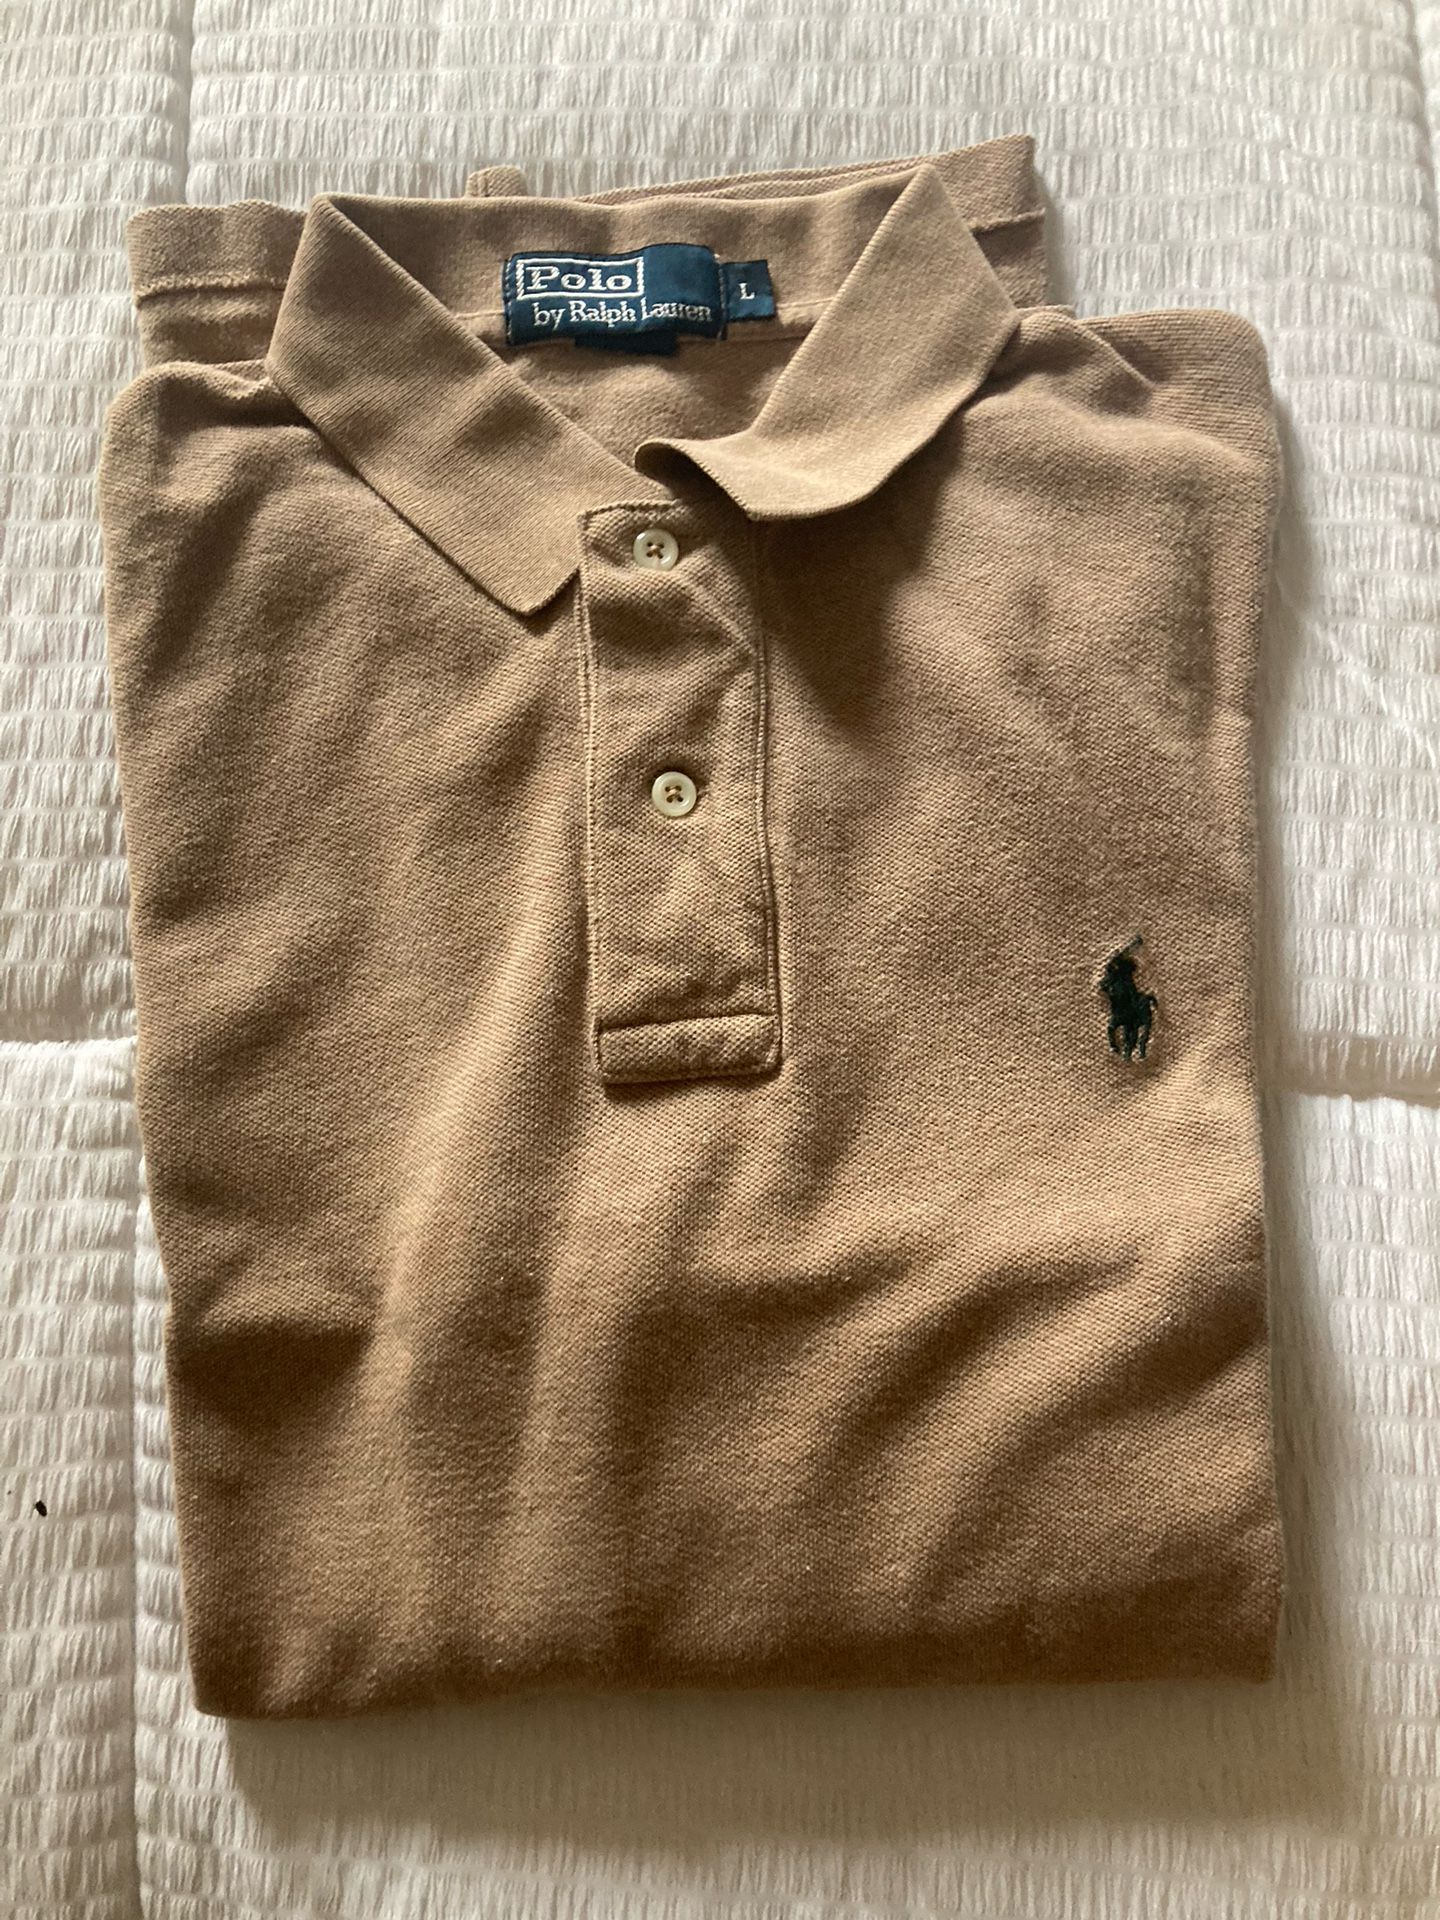 Vintage Polo Ralph Lauren Long Sleeve Brown Collared Shirt Sz Large